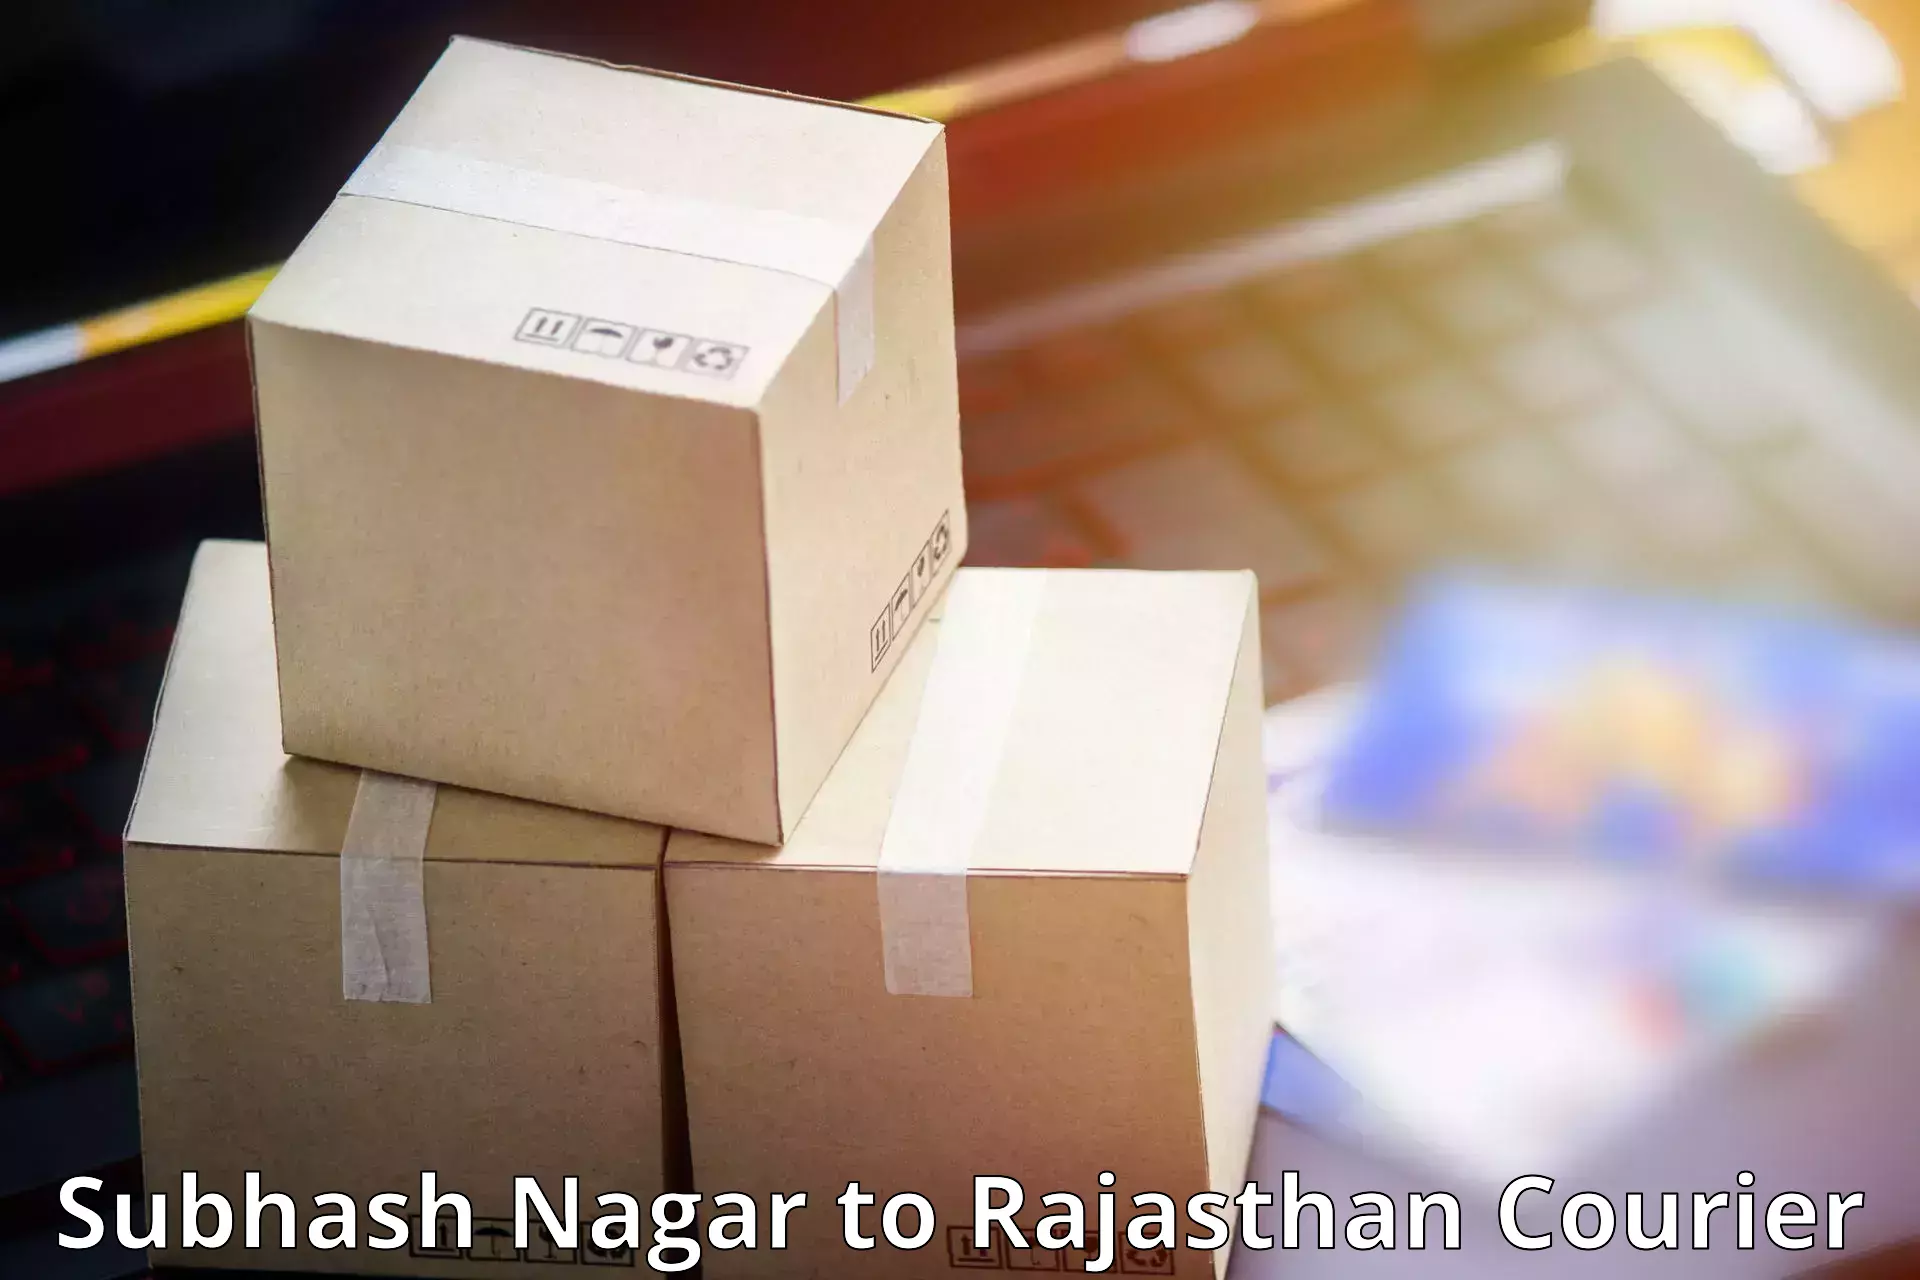 Courier service innovation Subhash Nagar to Laxmangarh